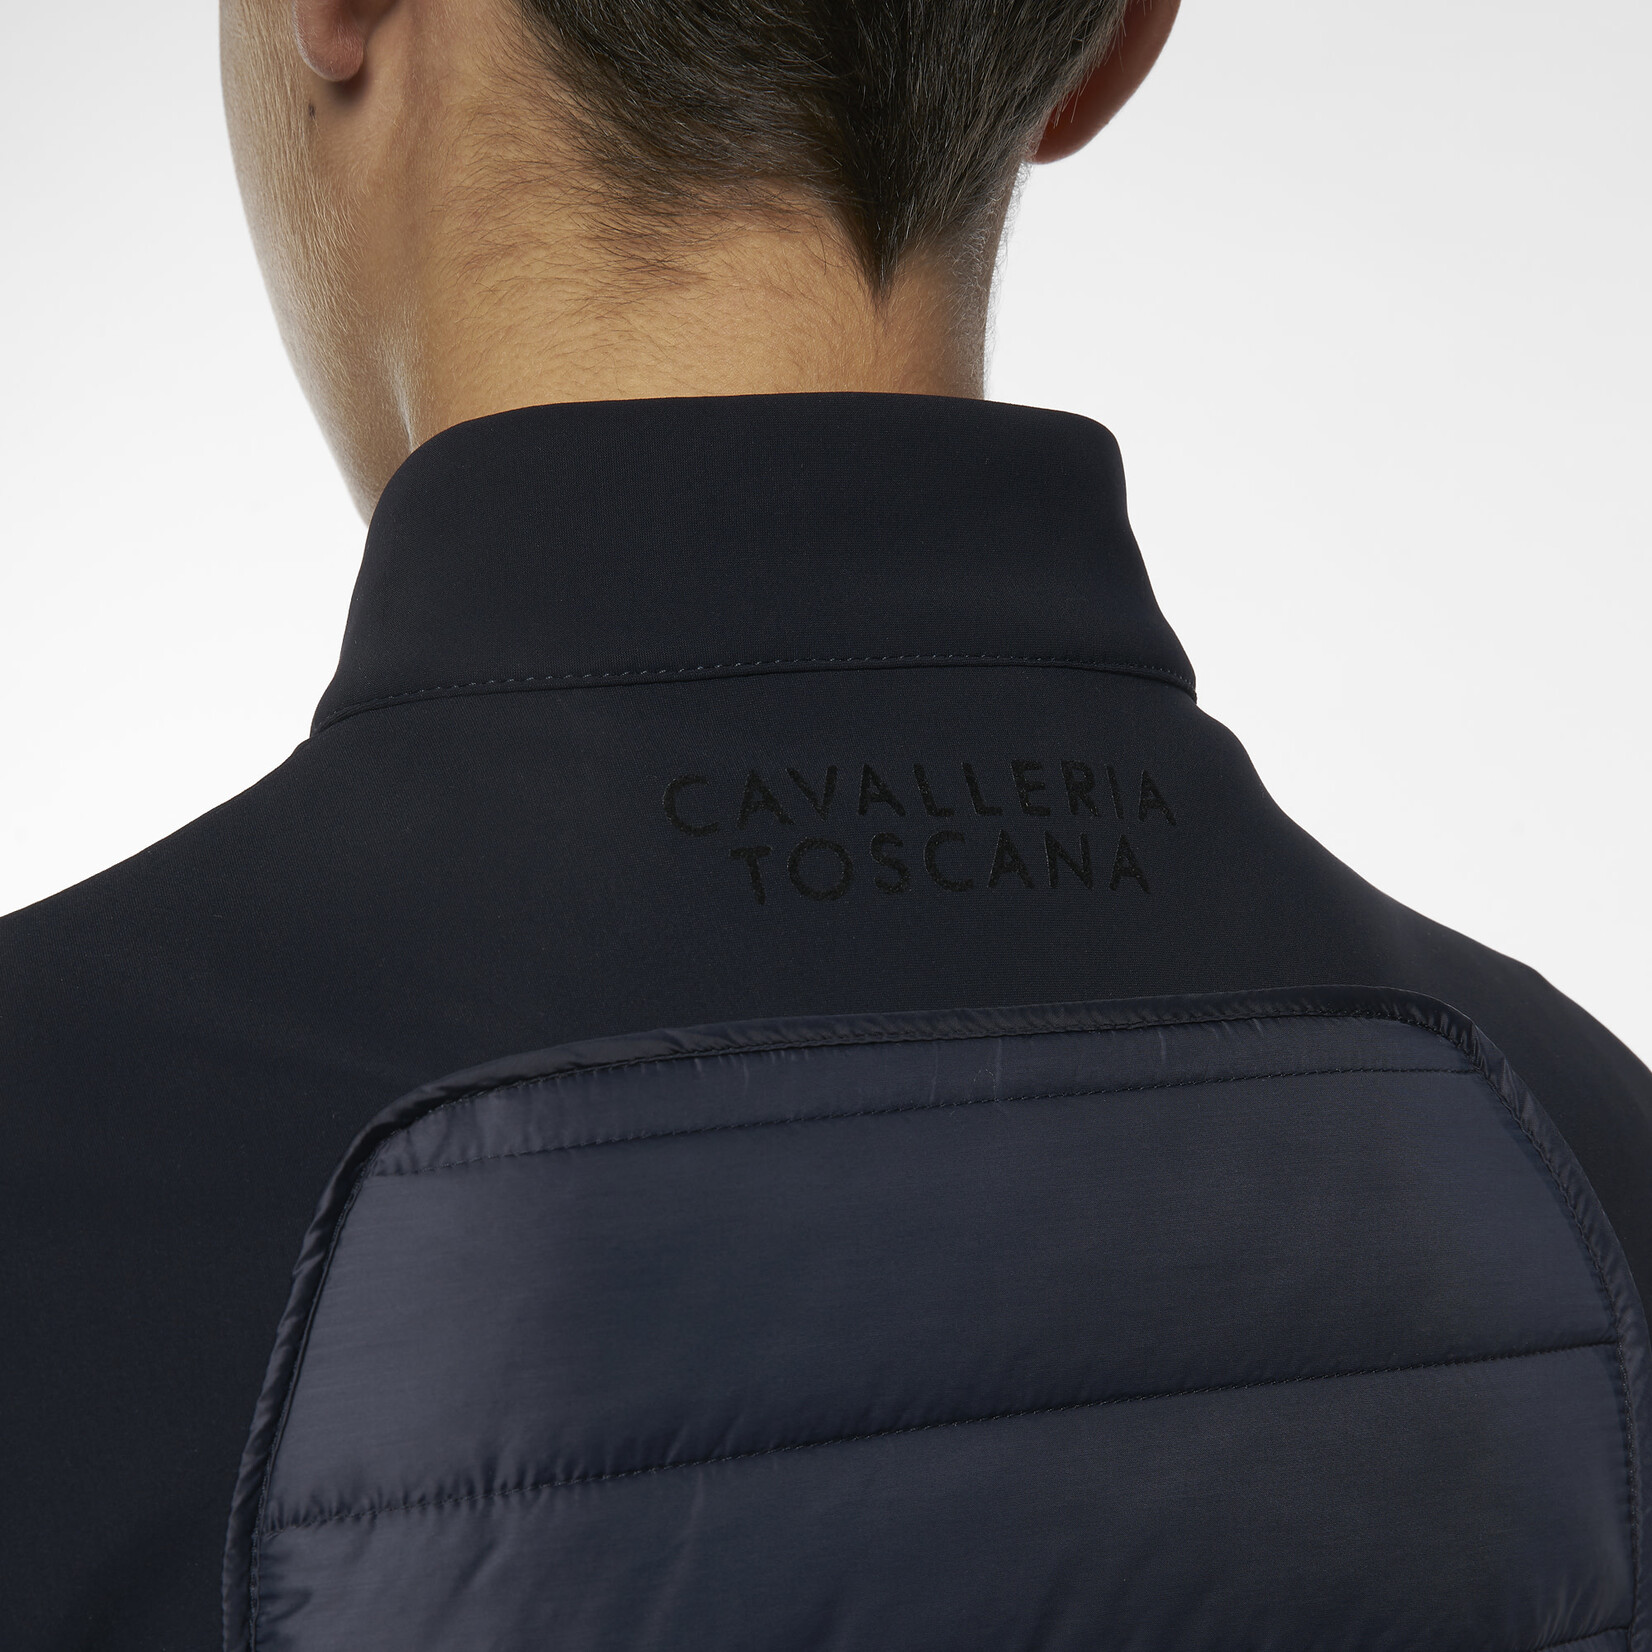 Cavalleria Toscana GIO004 Cavalleria Toscana Boy's Quilted Puffer Jacket